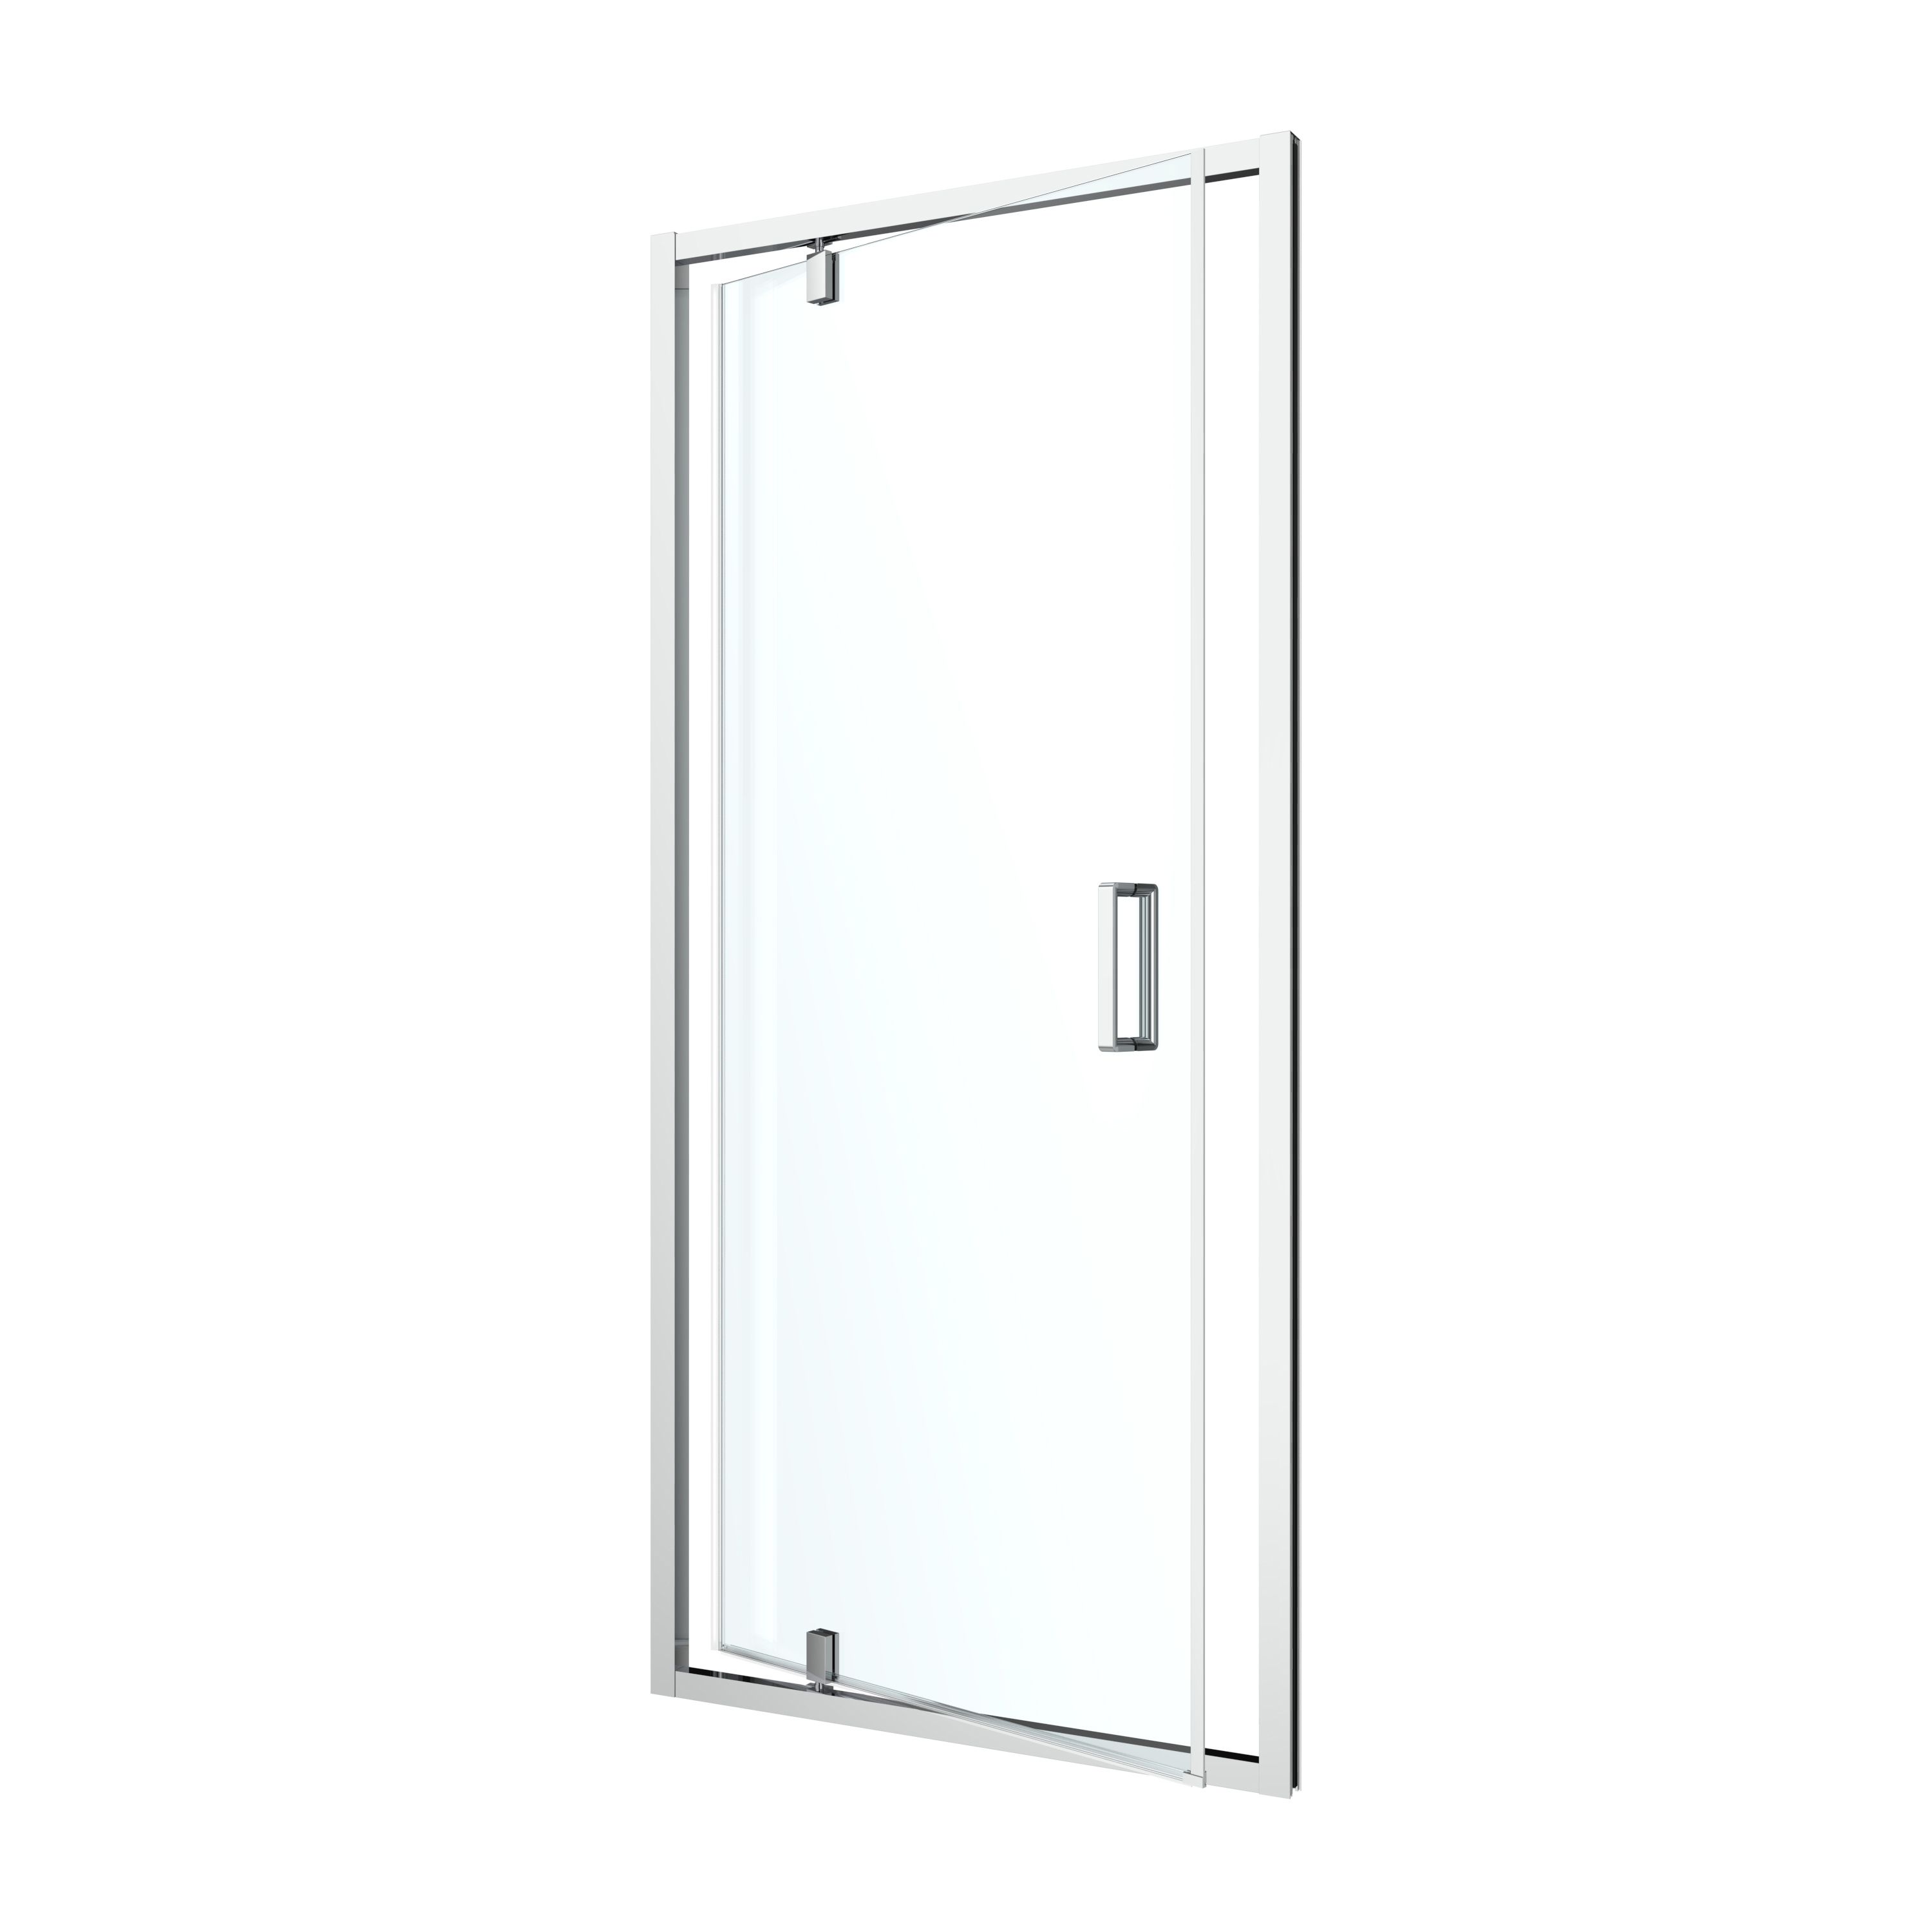 GoodHome Ledava Minimal frame Chrome effect Clear glass Half open pivot Shower Door (H)195cm (W)100cm